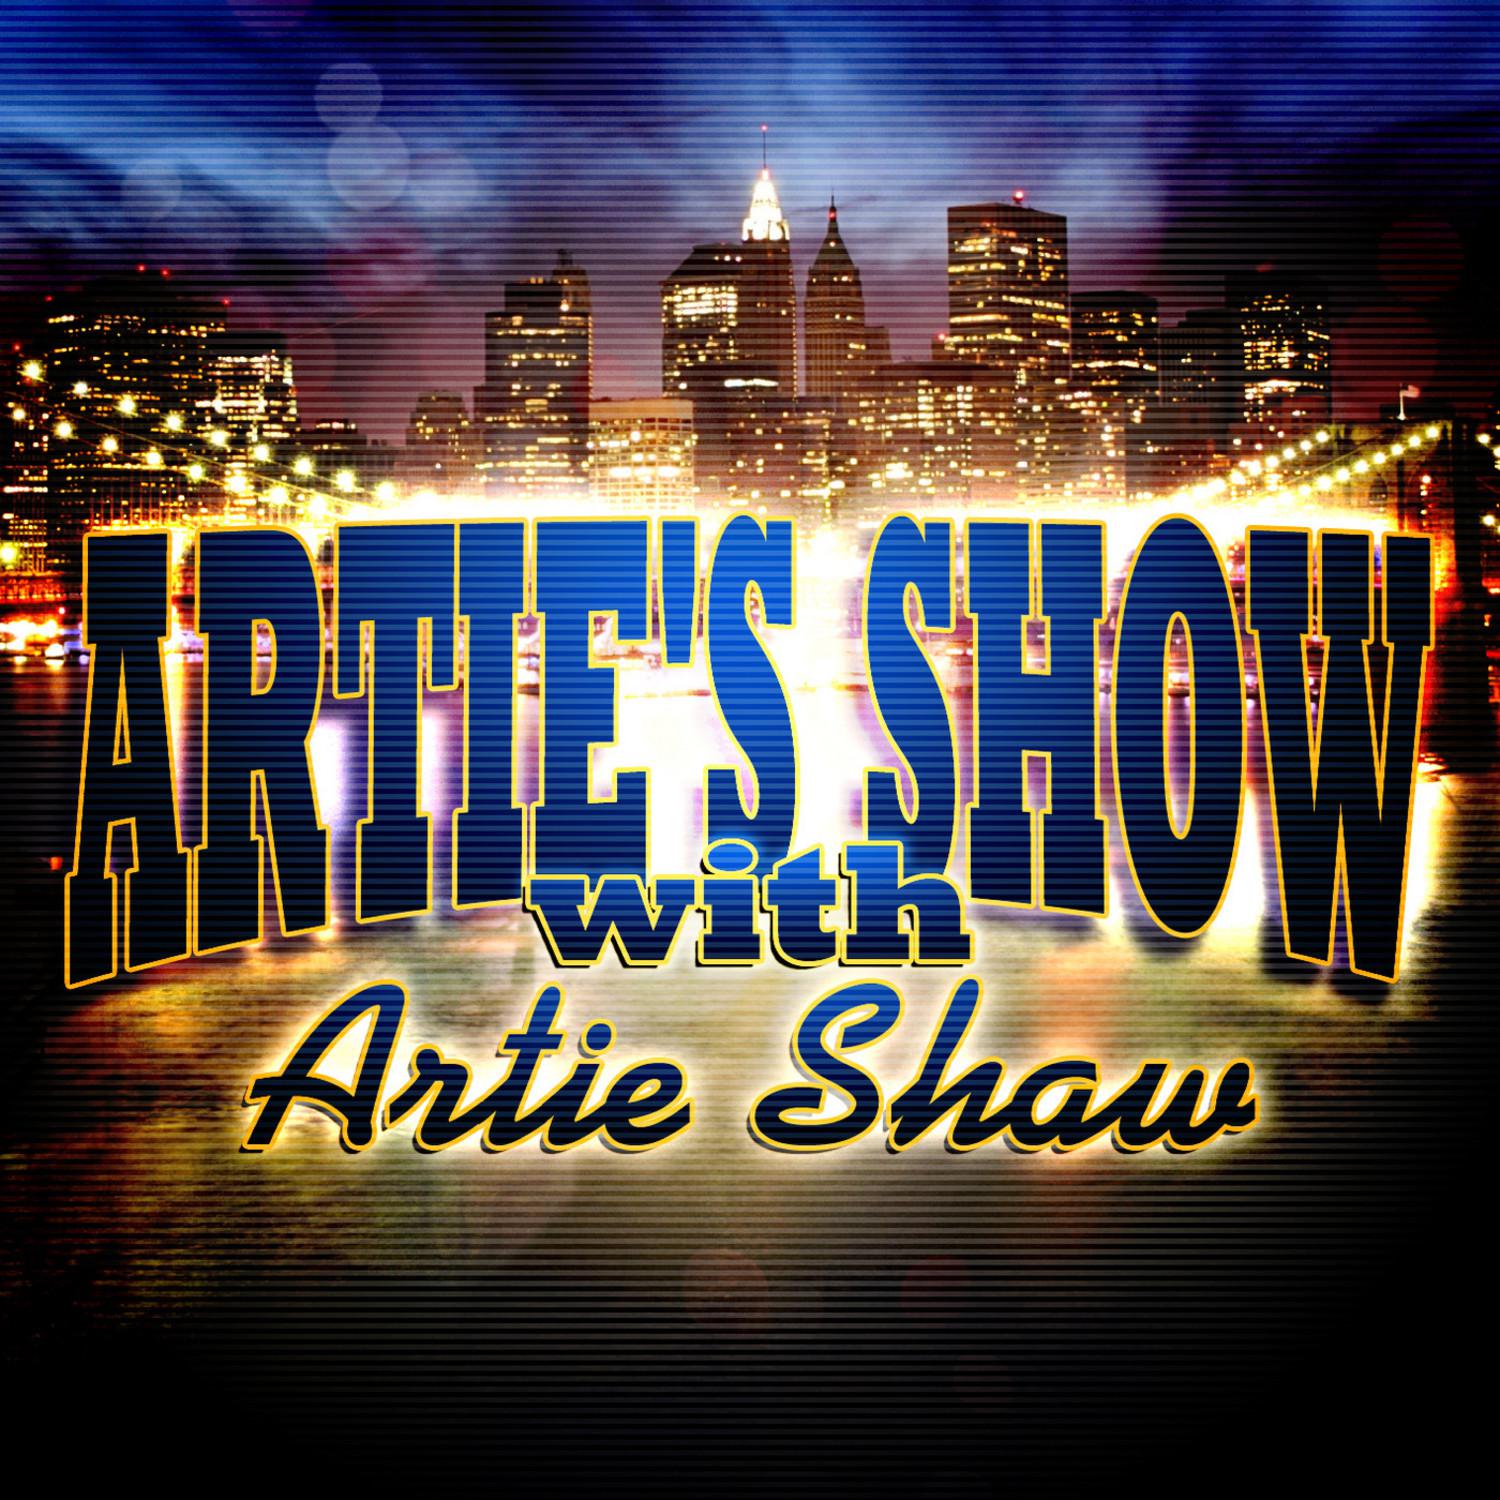 Artie's Show